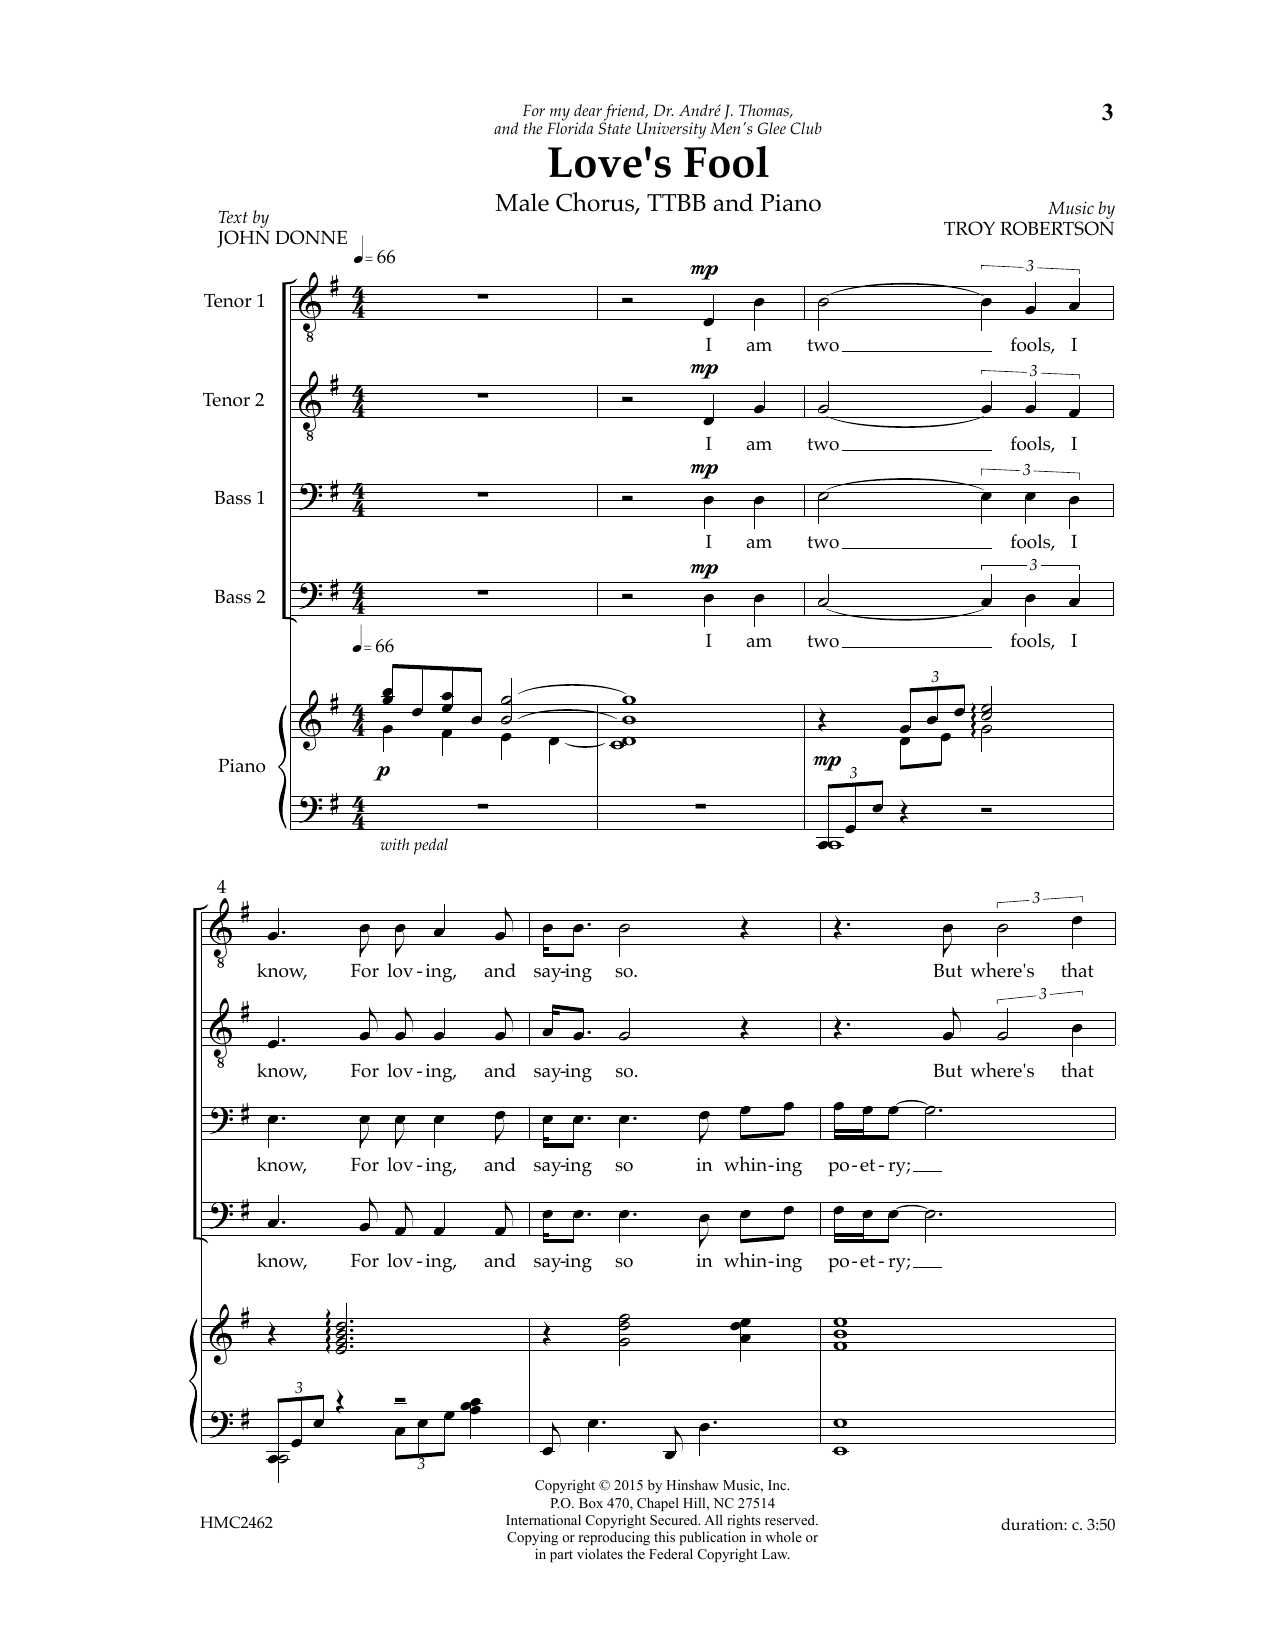 Troy Robertson Love's Fool Sheet Music Notes & Chords for TTBB Choir - Download or Print PDF